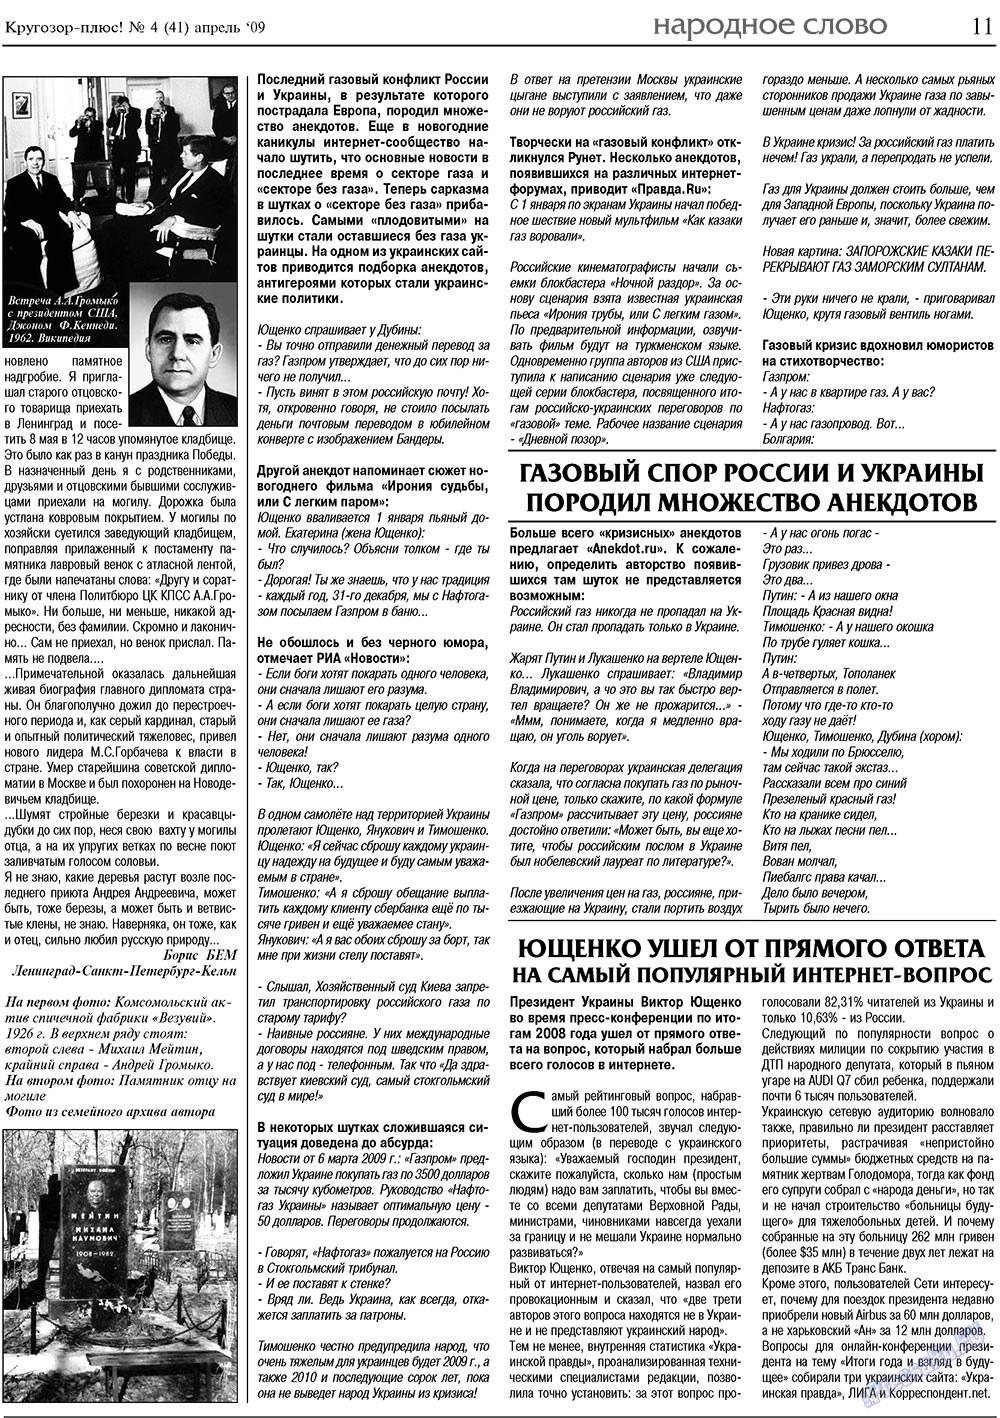 Кругозор плюс! (газета). 2009 год, номер 4, стр. 11